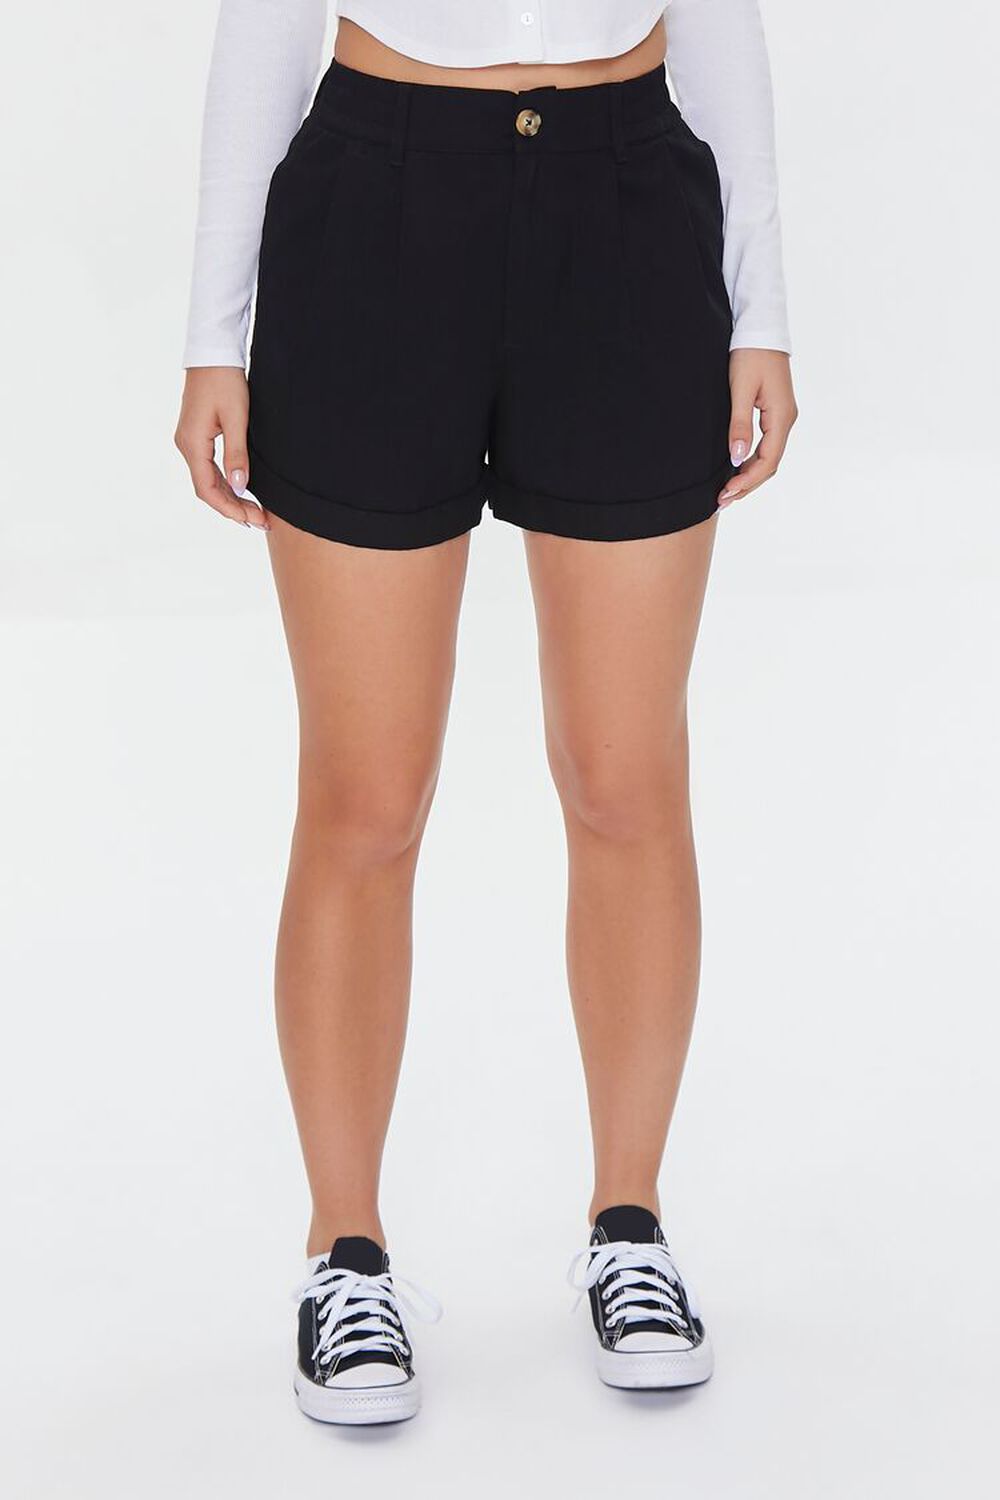 BLACK Cuffed Twill Shorts, image 2